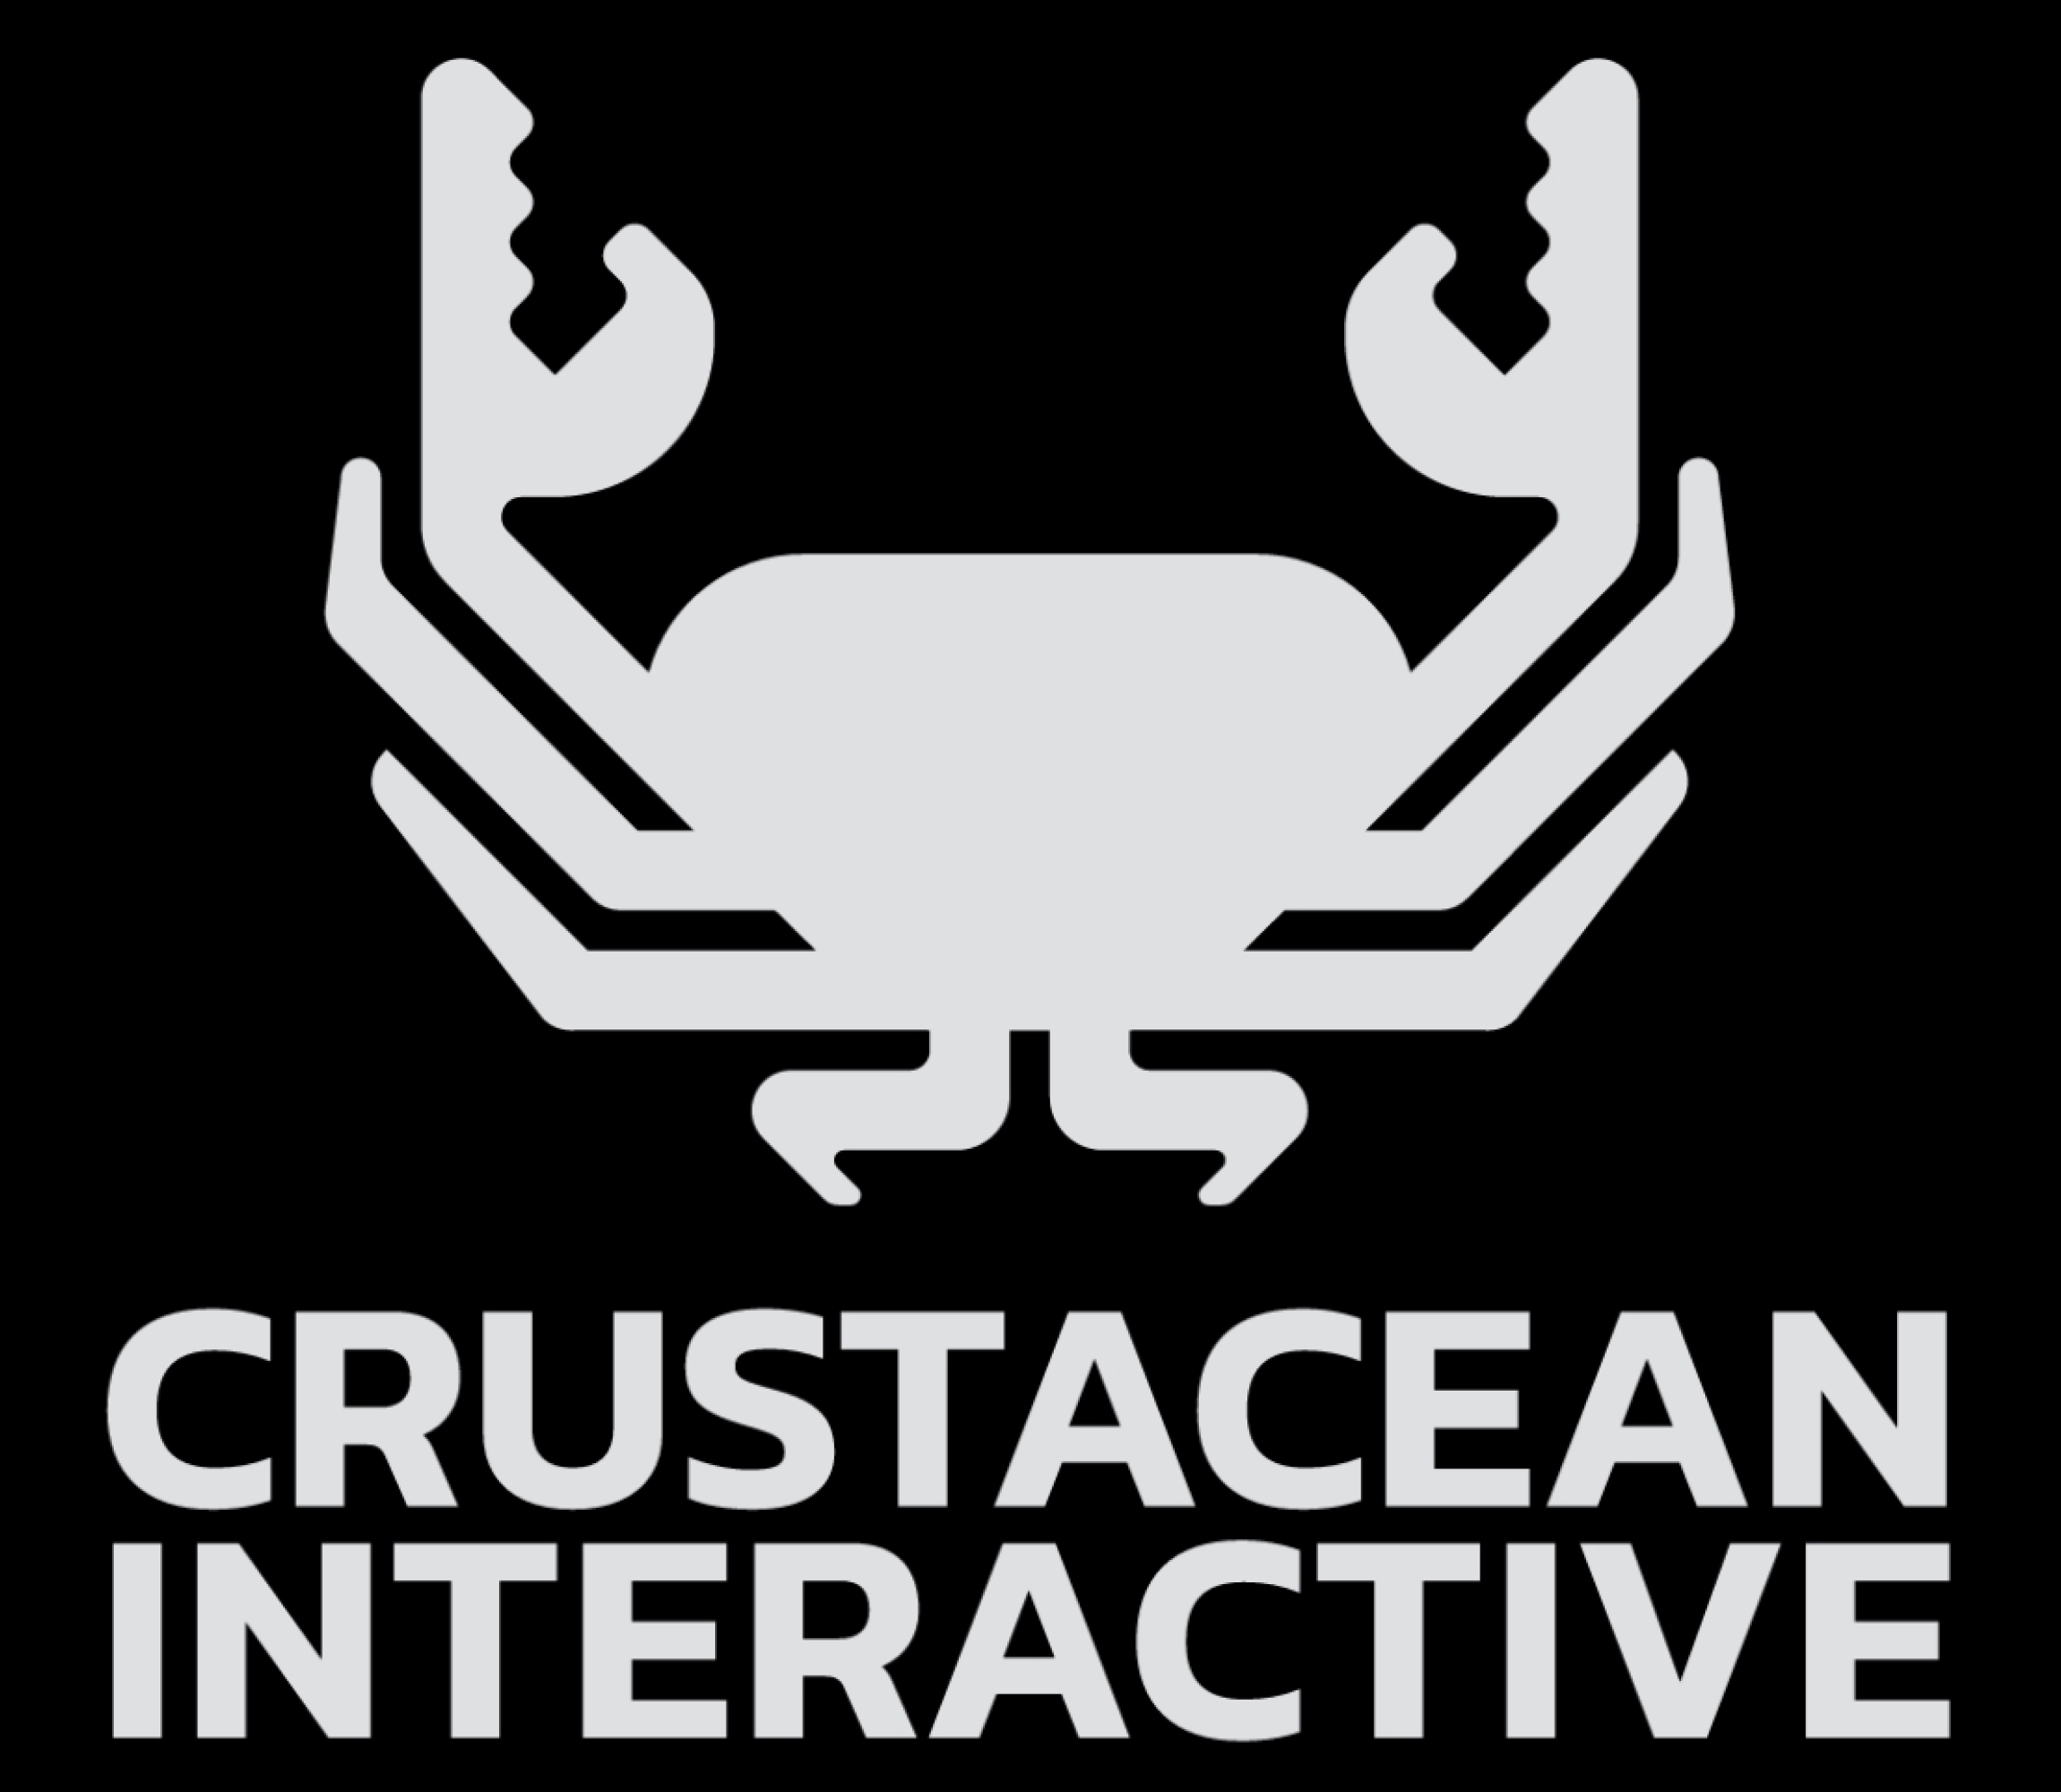 crustacean-logo-banner-dark